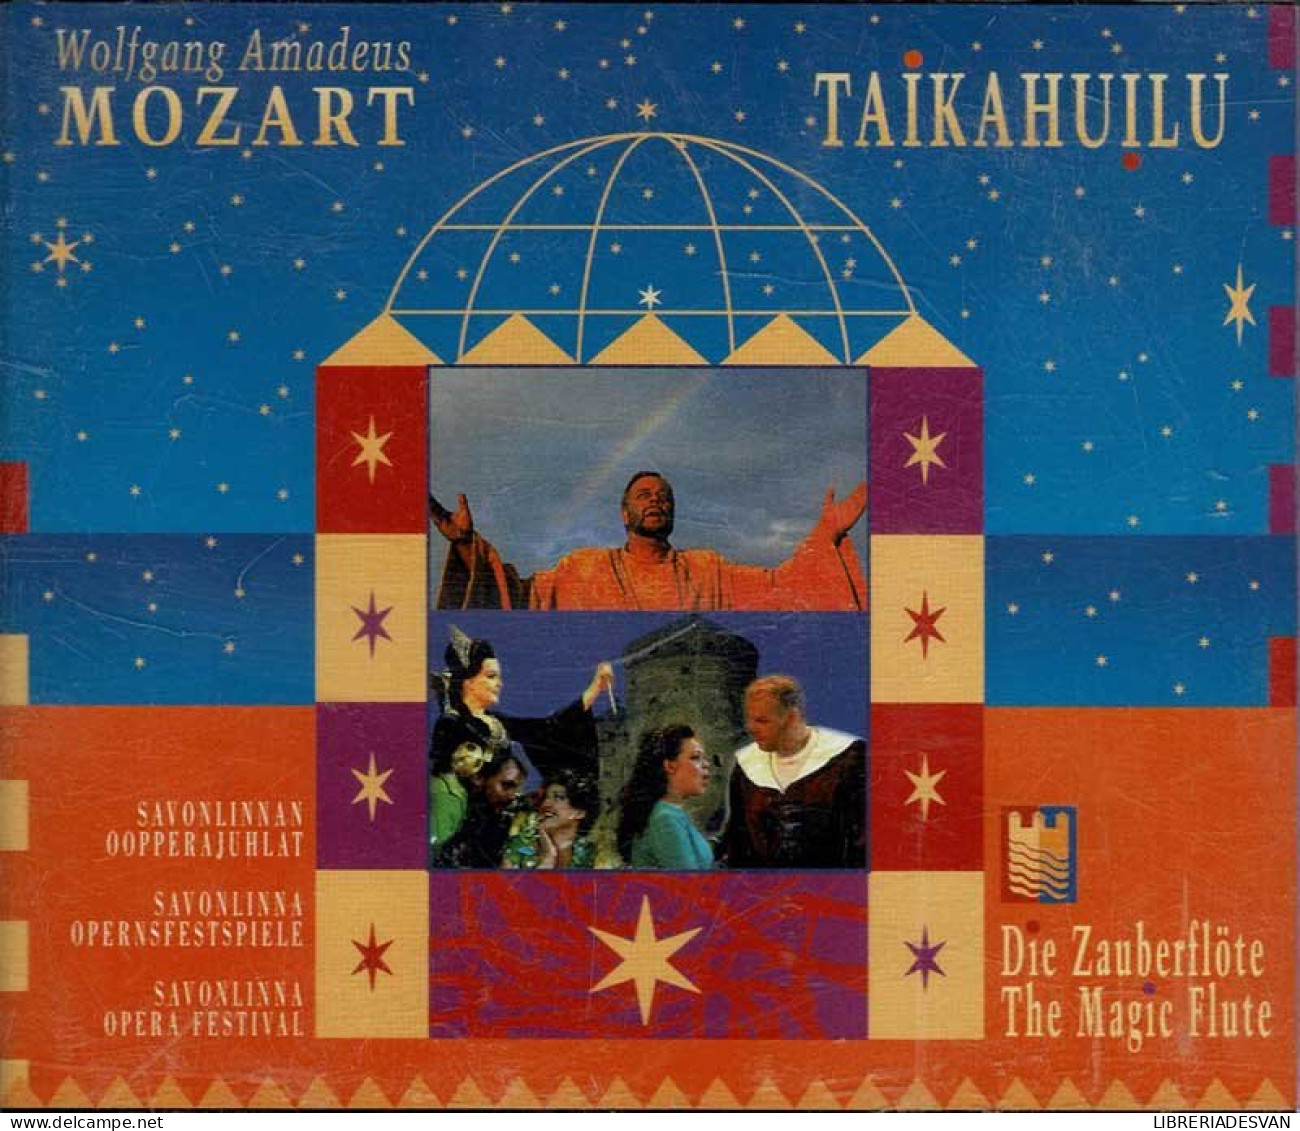 Wolfgang Amadeus Mozart - Taikahuilu. Die Zauberflöte. The Magic Flute. 2 X CD - Clásica